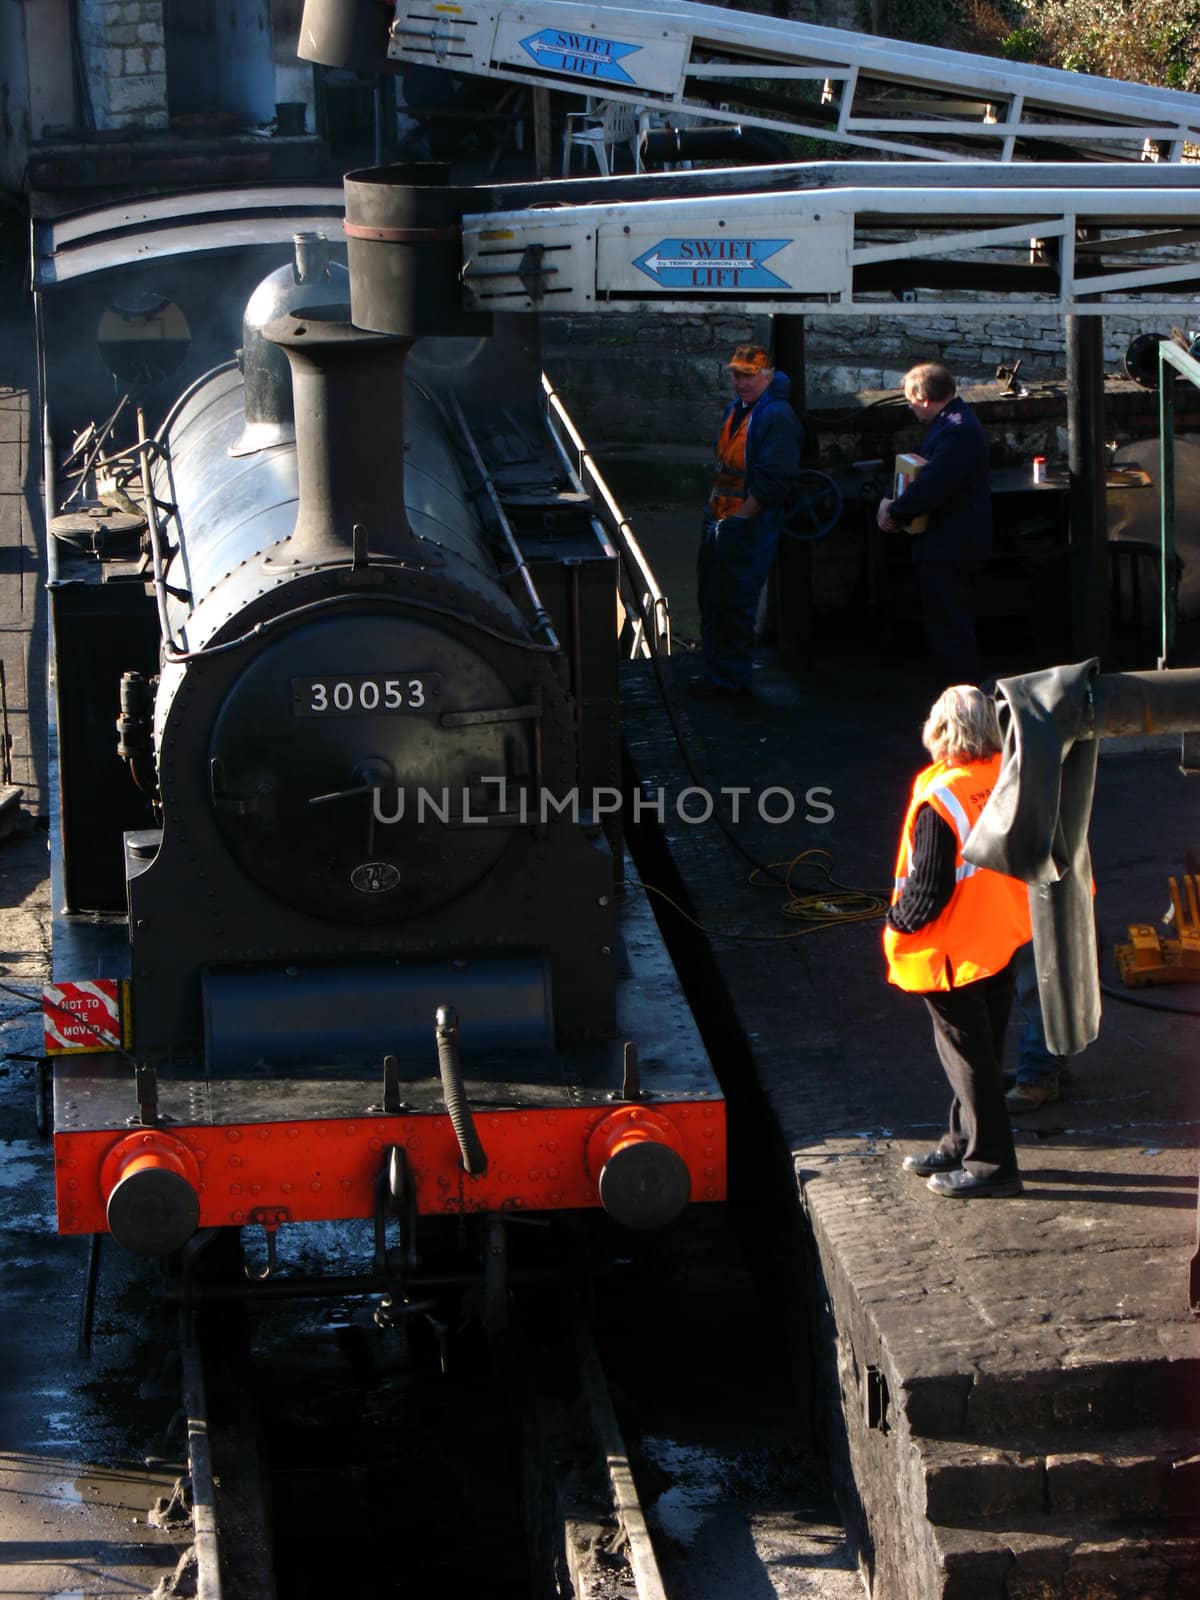 Heritage steam railway by tommroch